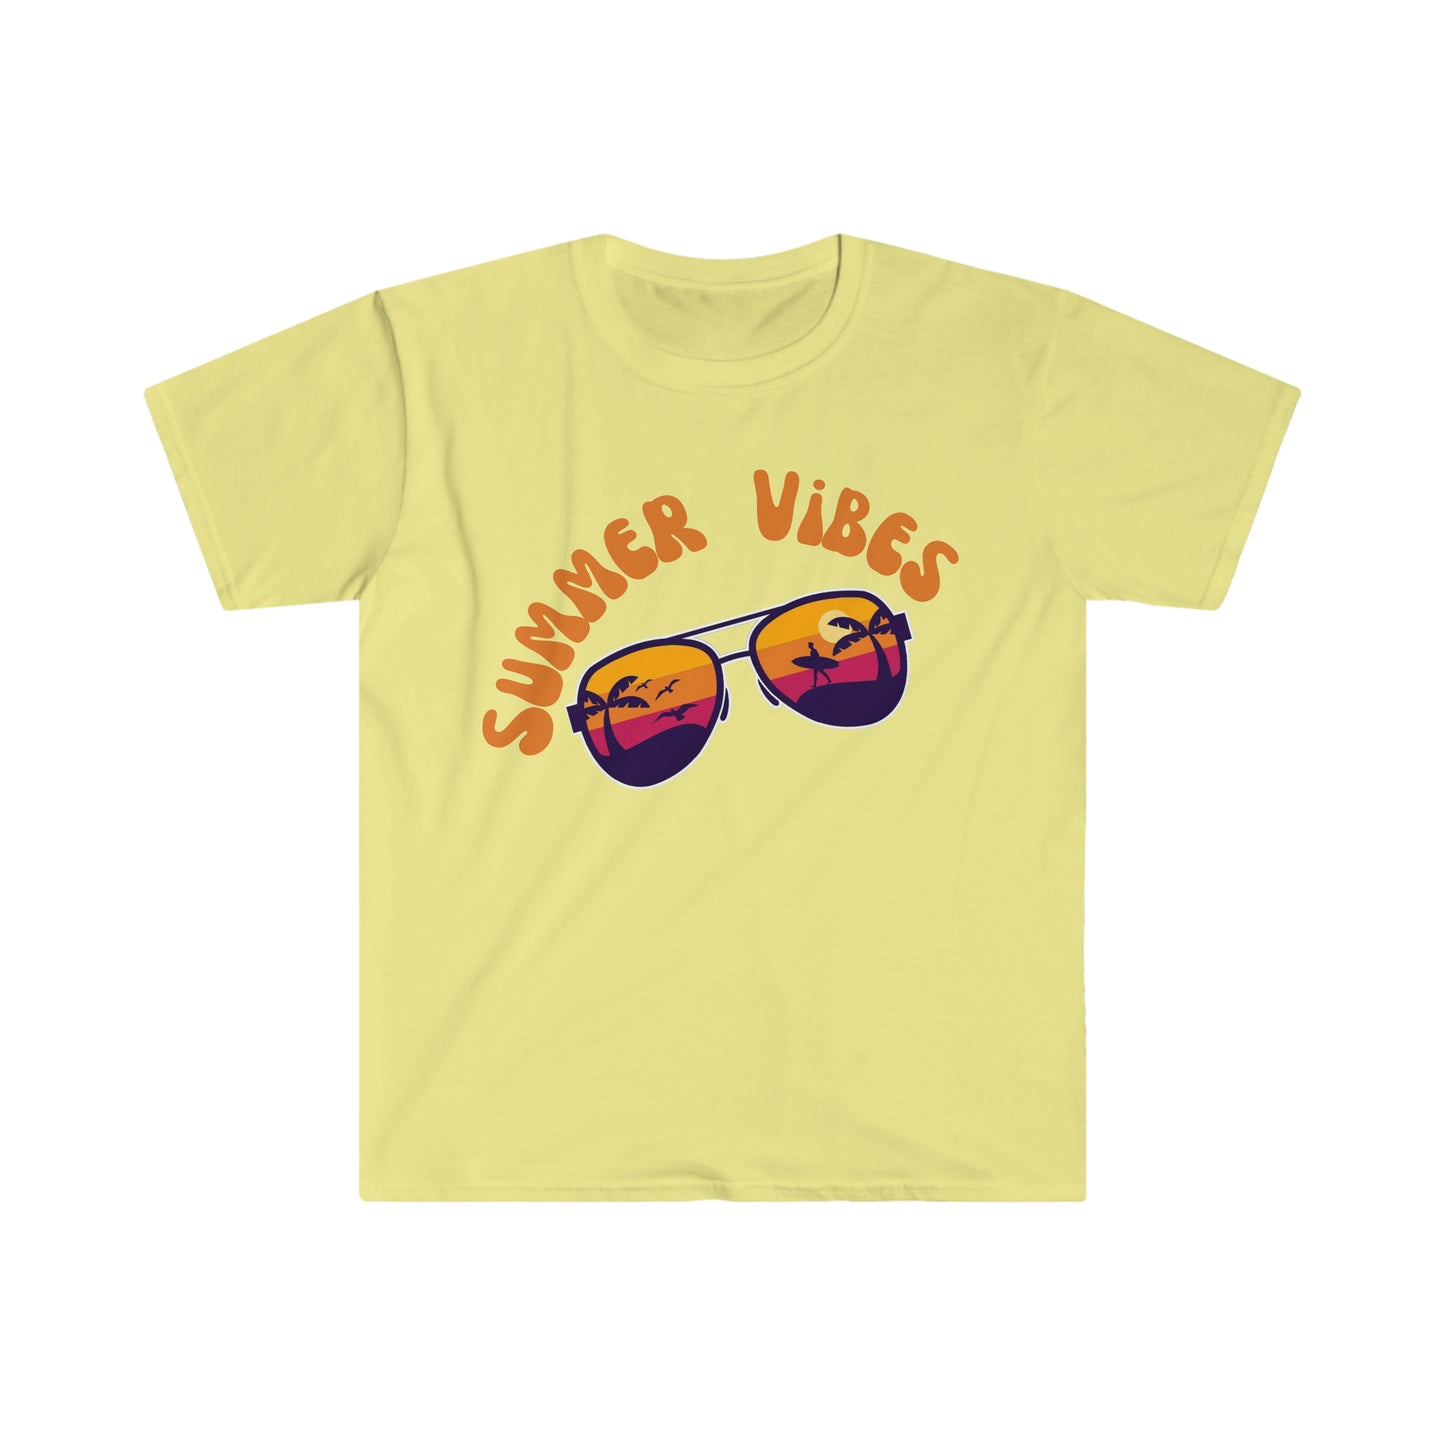 Summer Vibes Shirt, Summer Shirt, Vacation Shirt, Summer Tee, Summer Vacation Tee, Fun Summer Shirt, Summer Tee, Beach shirts, Summer Vibe -  L2KBoutique